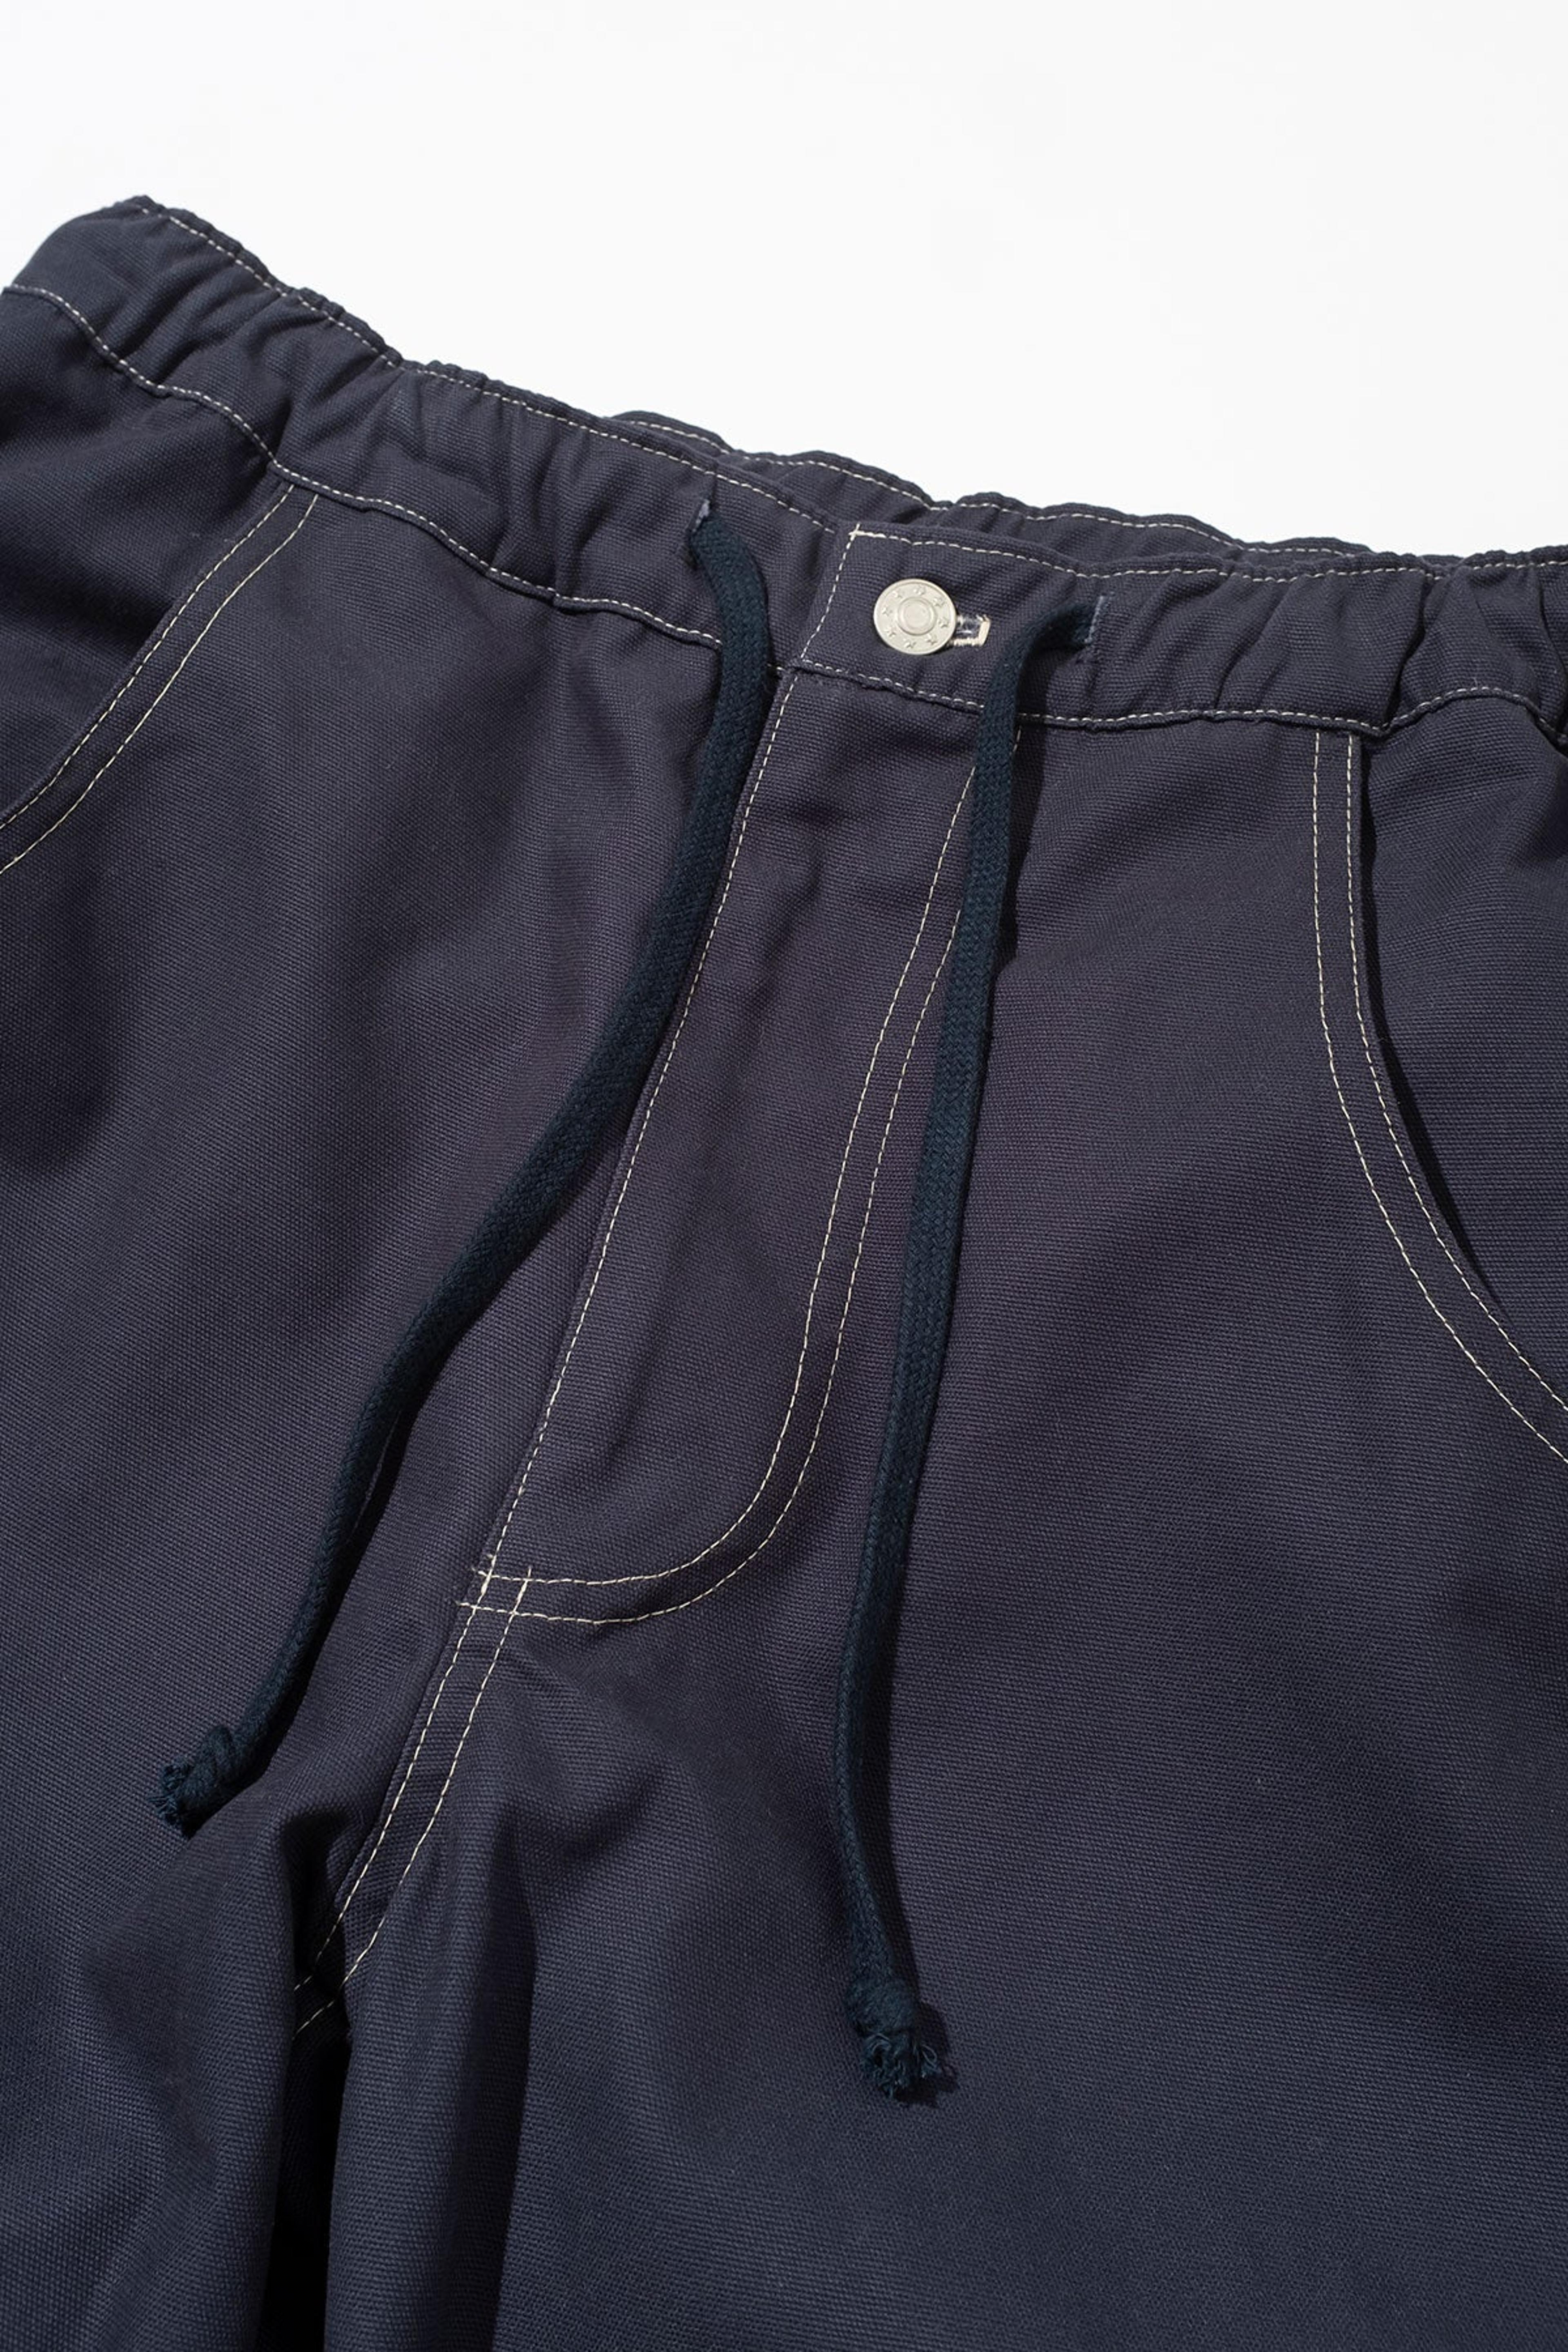 Alternate View 7 of Workwear Pants